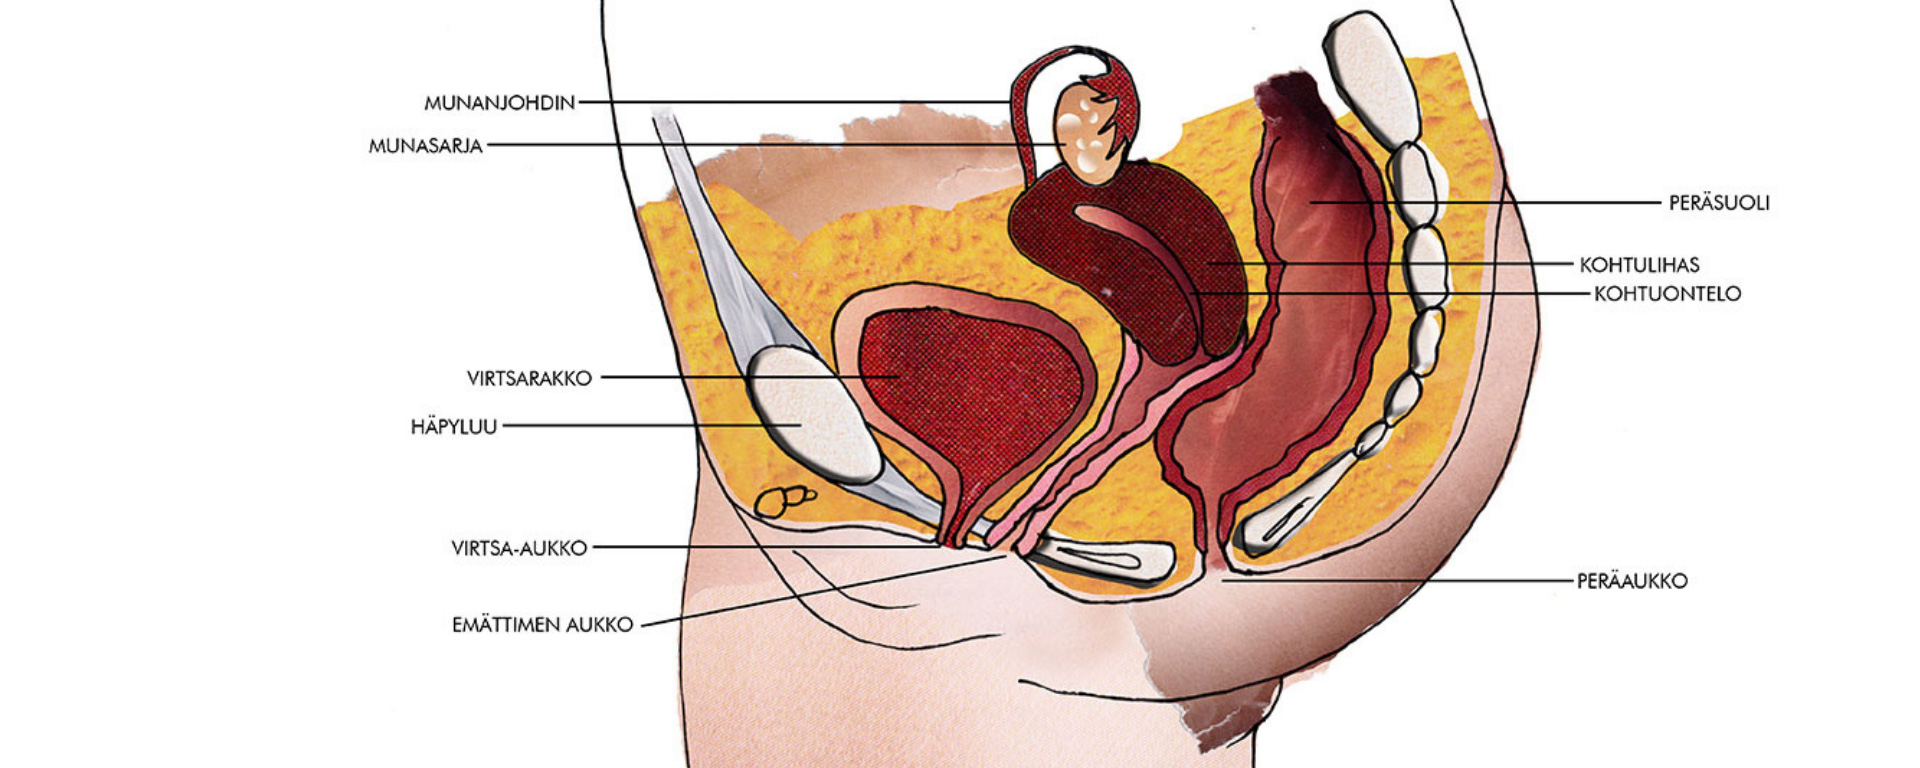 Emättimen anatomia -piirroskuva